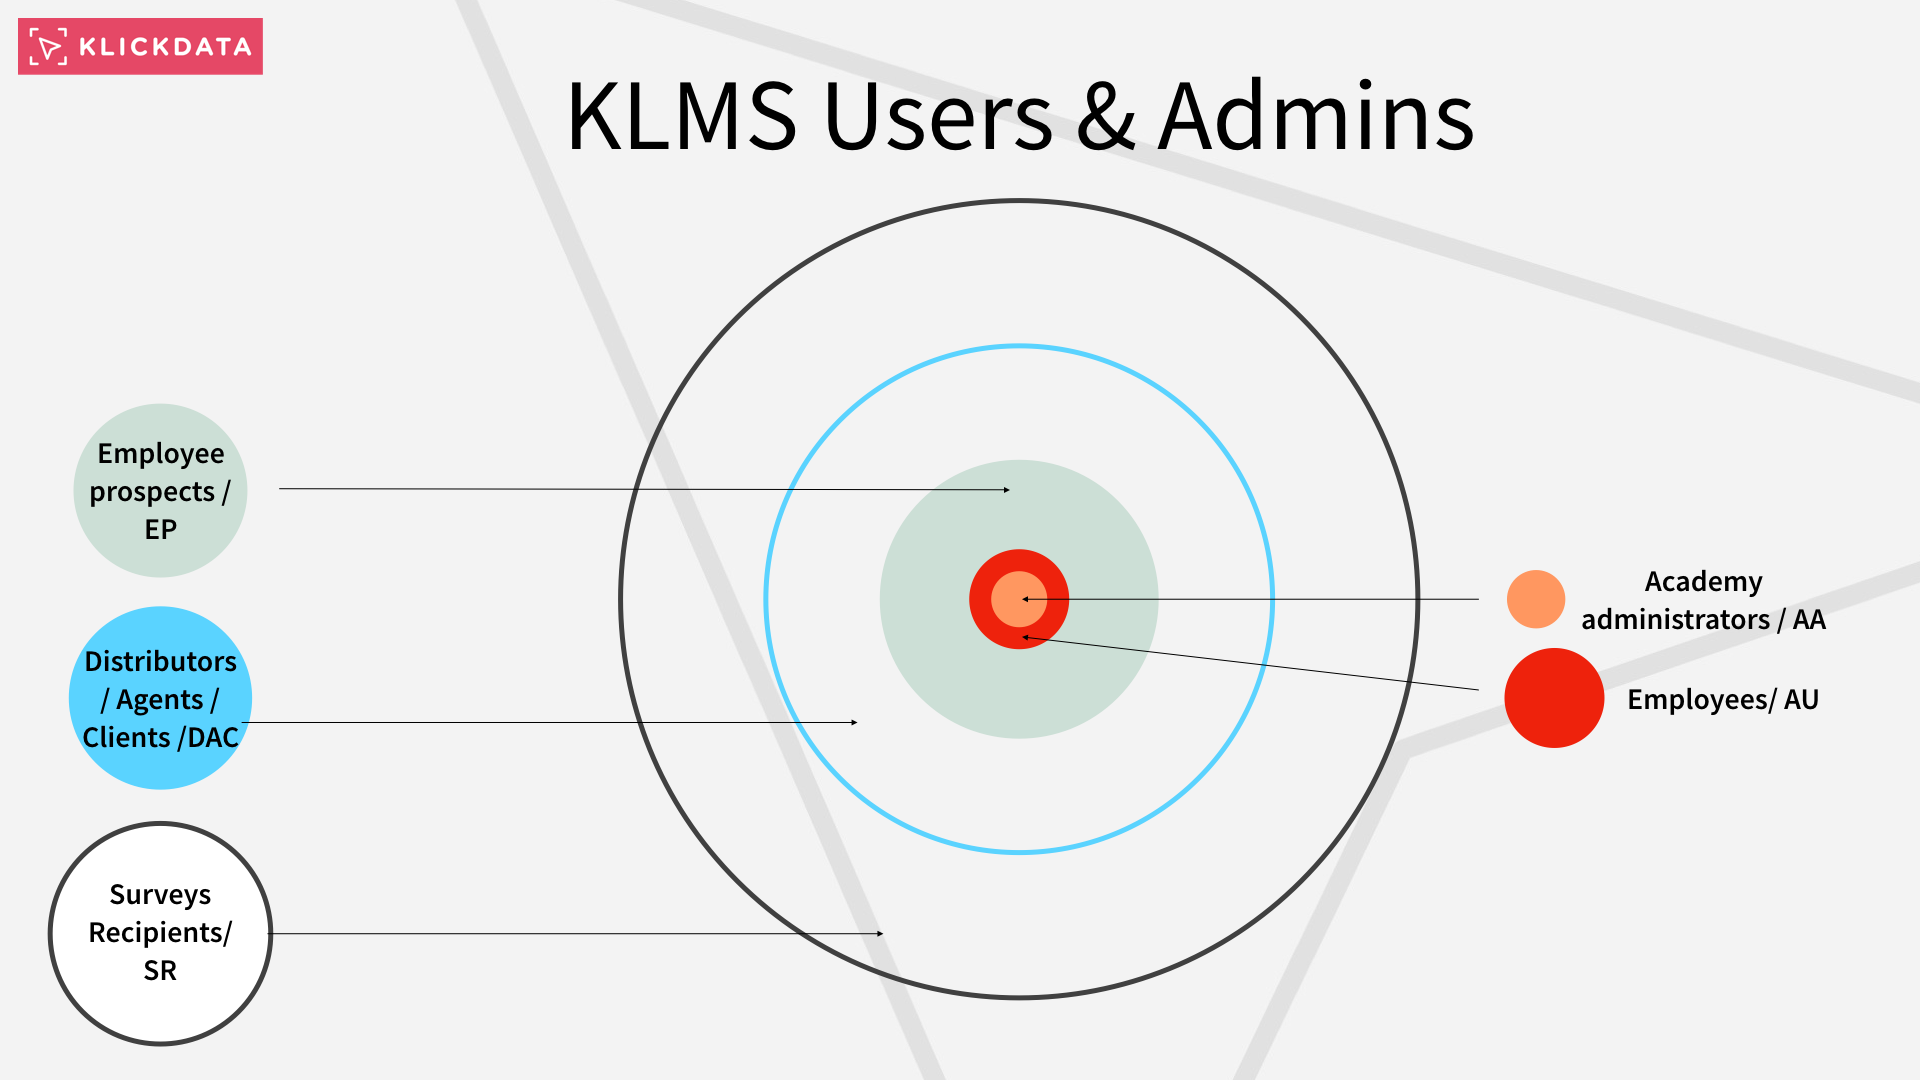 KD KLMS circle world roles 211219.001